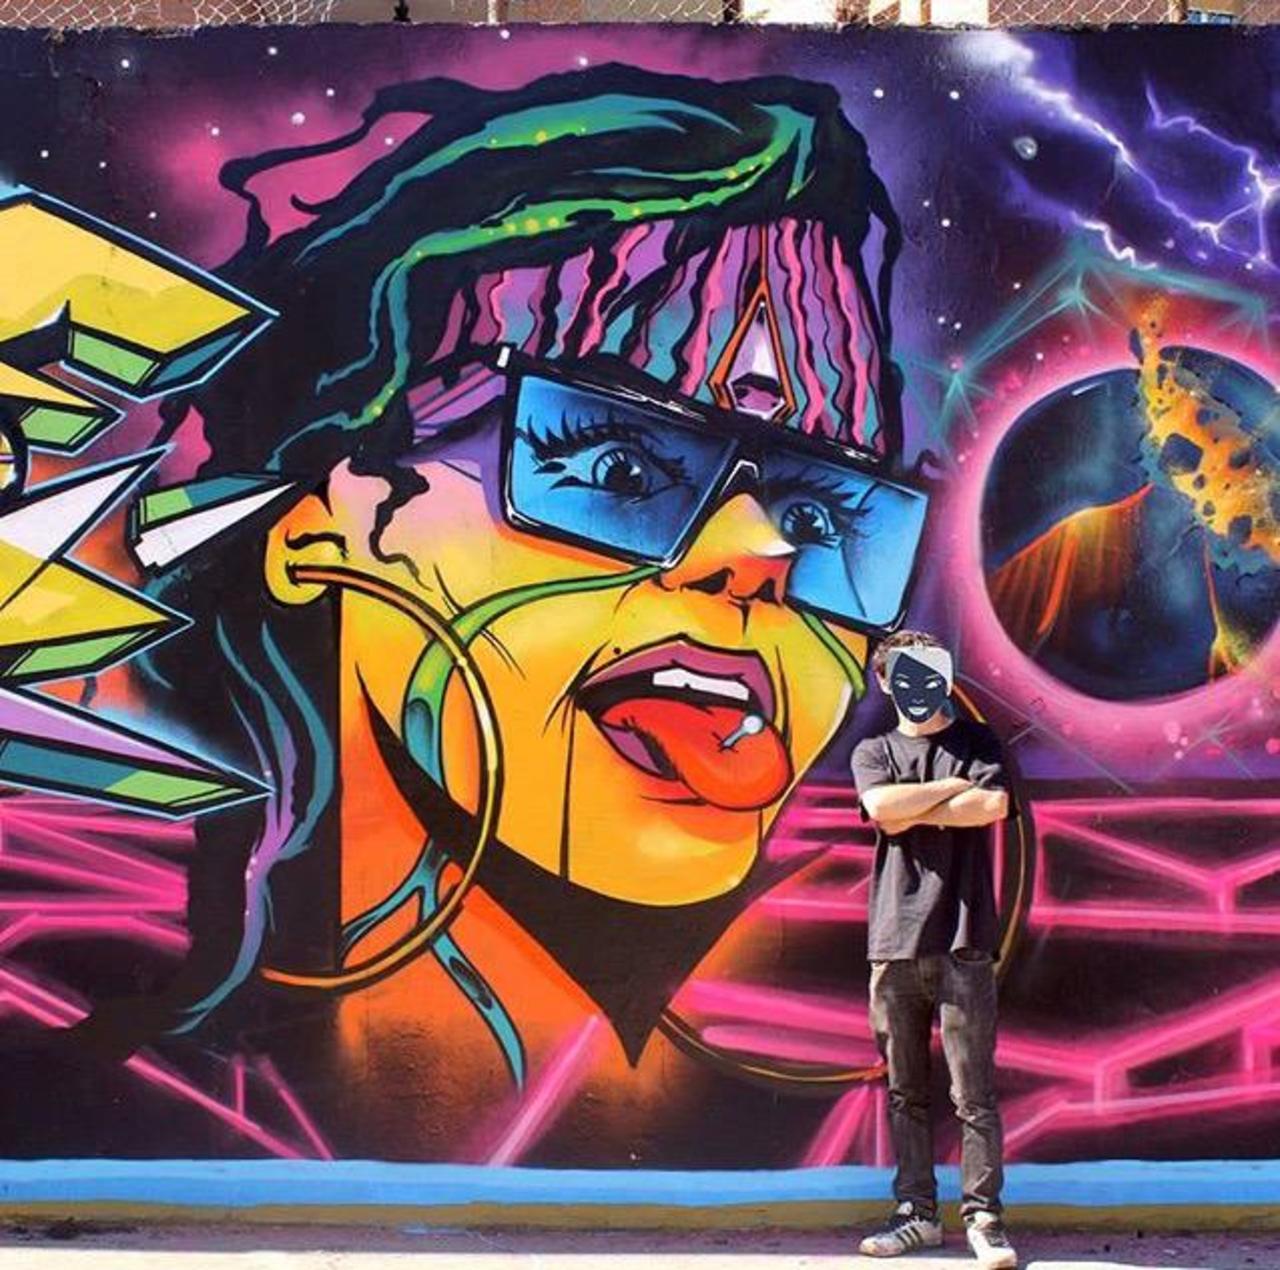 Brilliant new Street Art by the artist Jaycaes

#art #graffiti #mural #streetart http://t.co/TiNYDNPlxf http://twitter.com/GoogleStreetArt/status/649205434331590656/photo/1/large?utm_source=fb&utm_medium=fb&utm_campaign=charlesjackso14&utm_content=649560661031301120